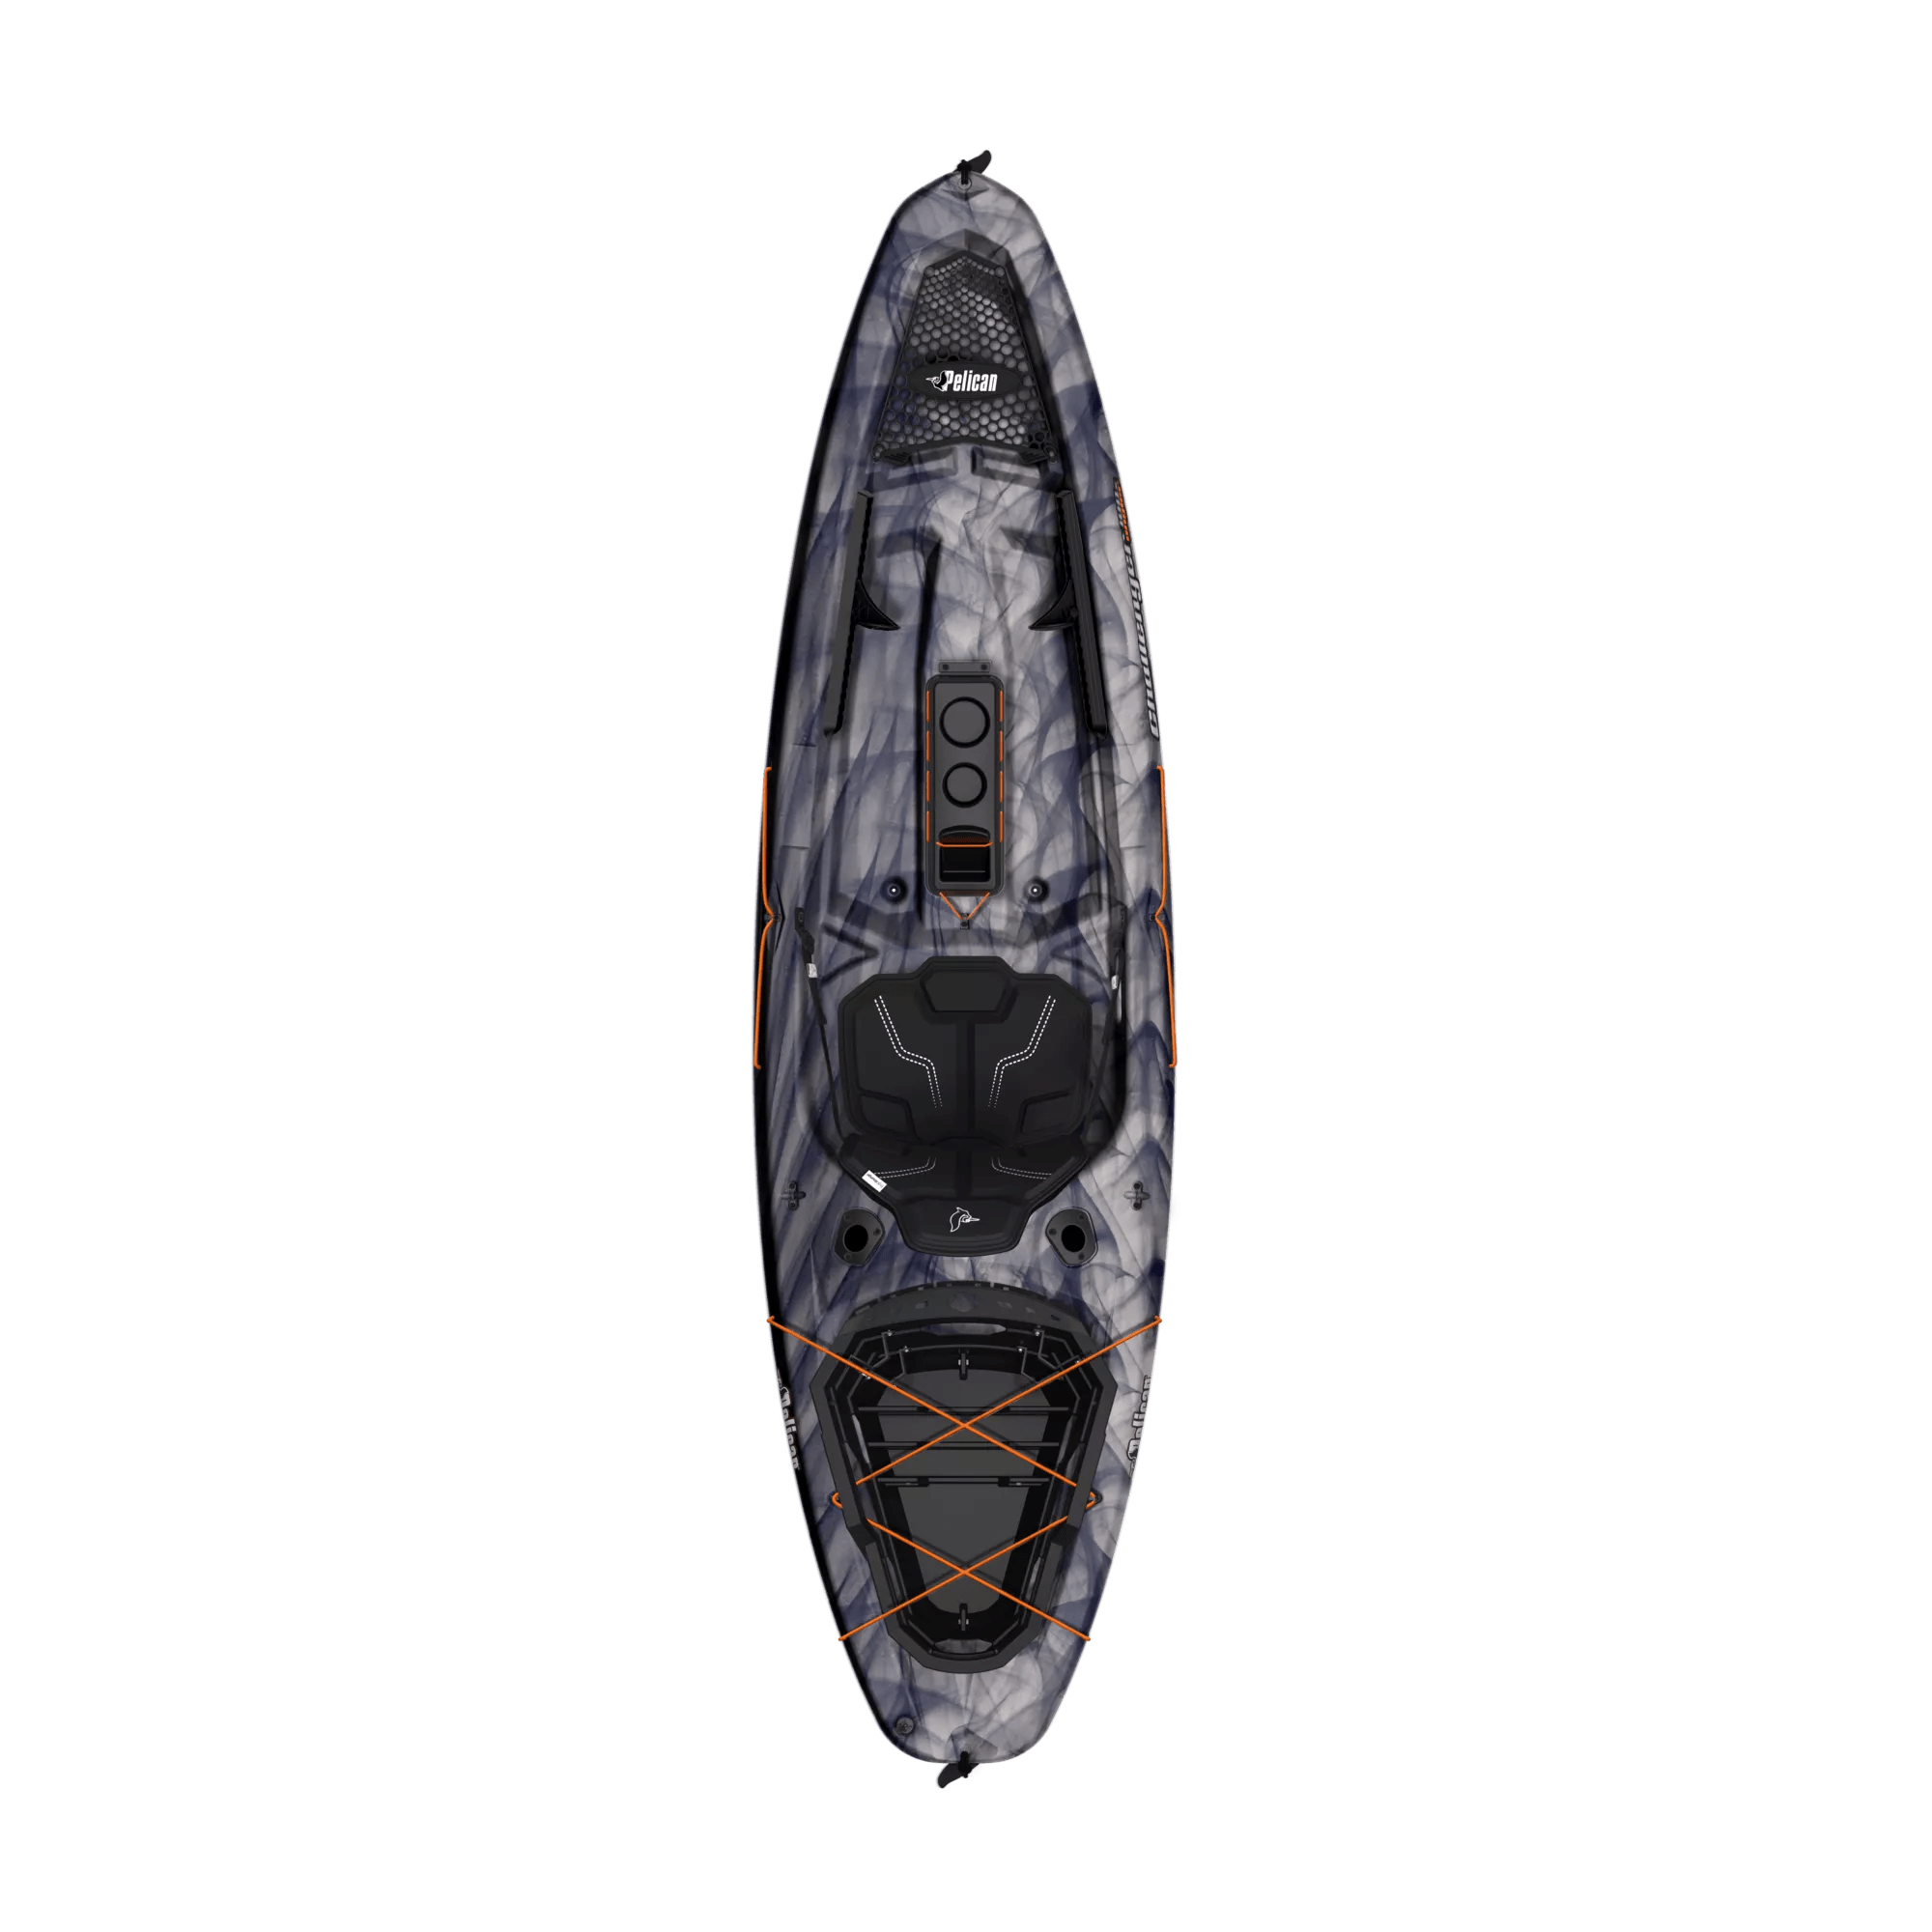 PELICAN - ChallengerSentinel 100X Angler Fishing Kayak - Black - MBF10P304 - TOP